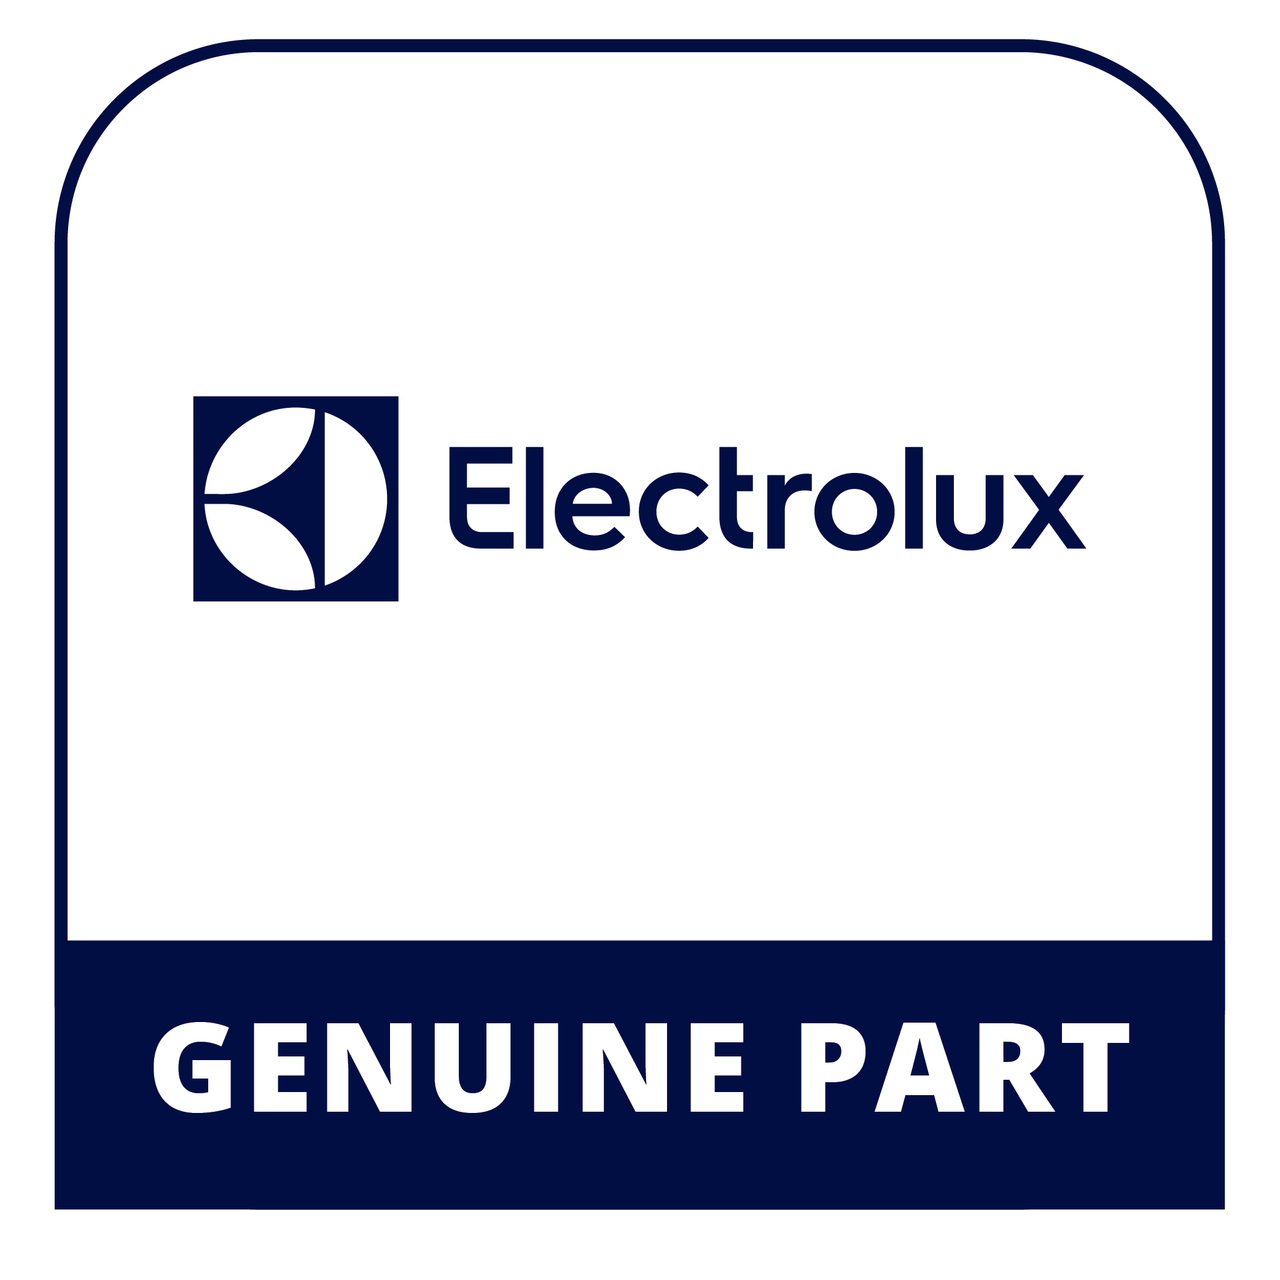 Frigidaire - Electrolux 316403102 Seal - Genuine Electrolux Part